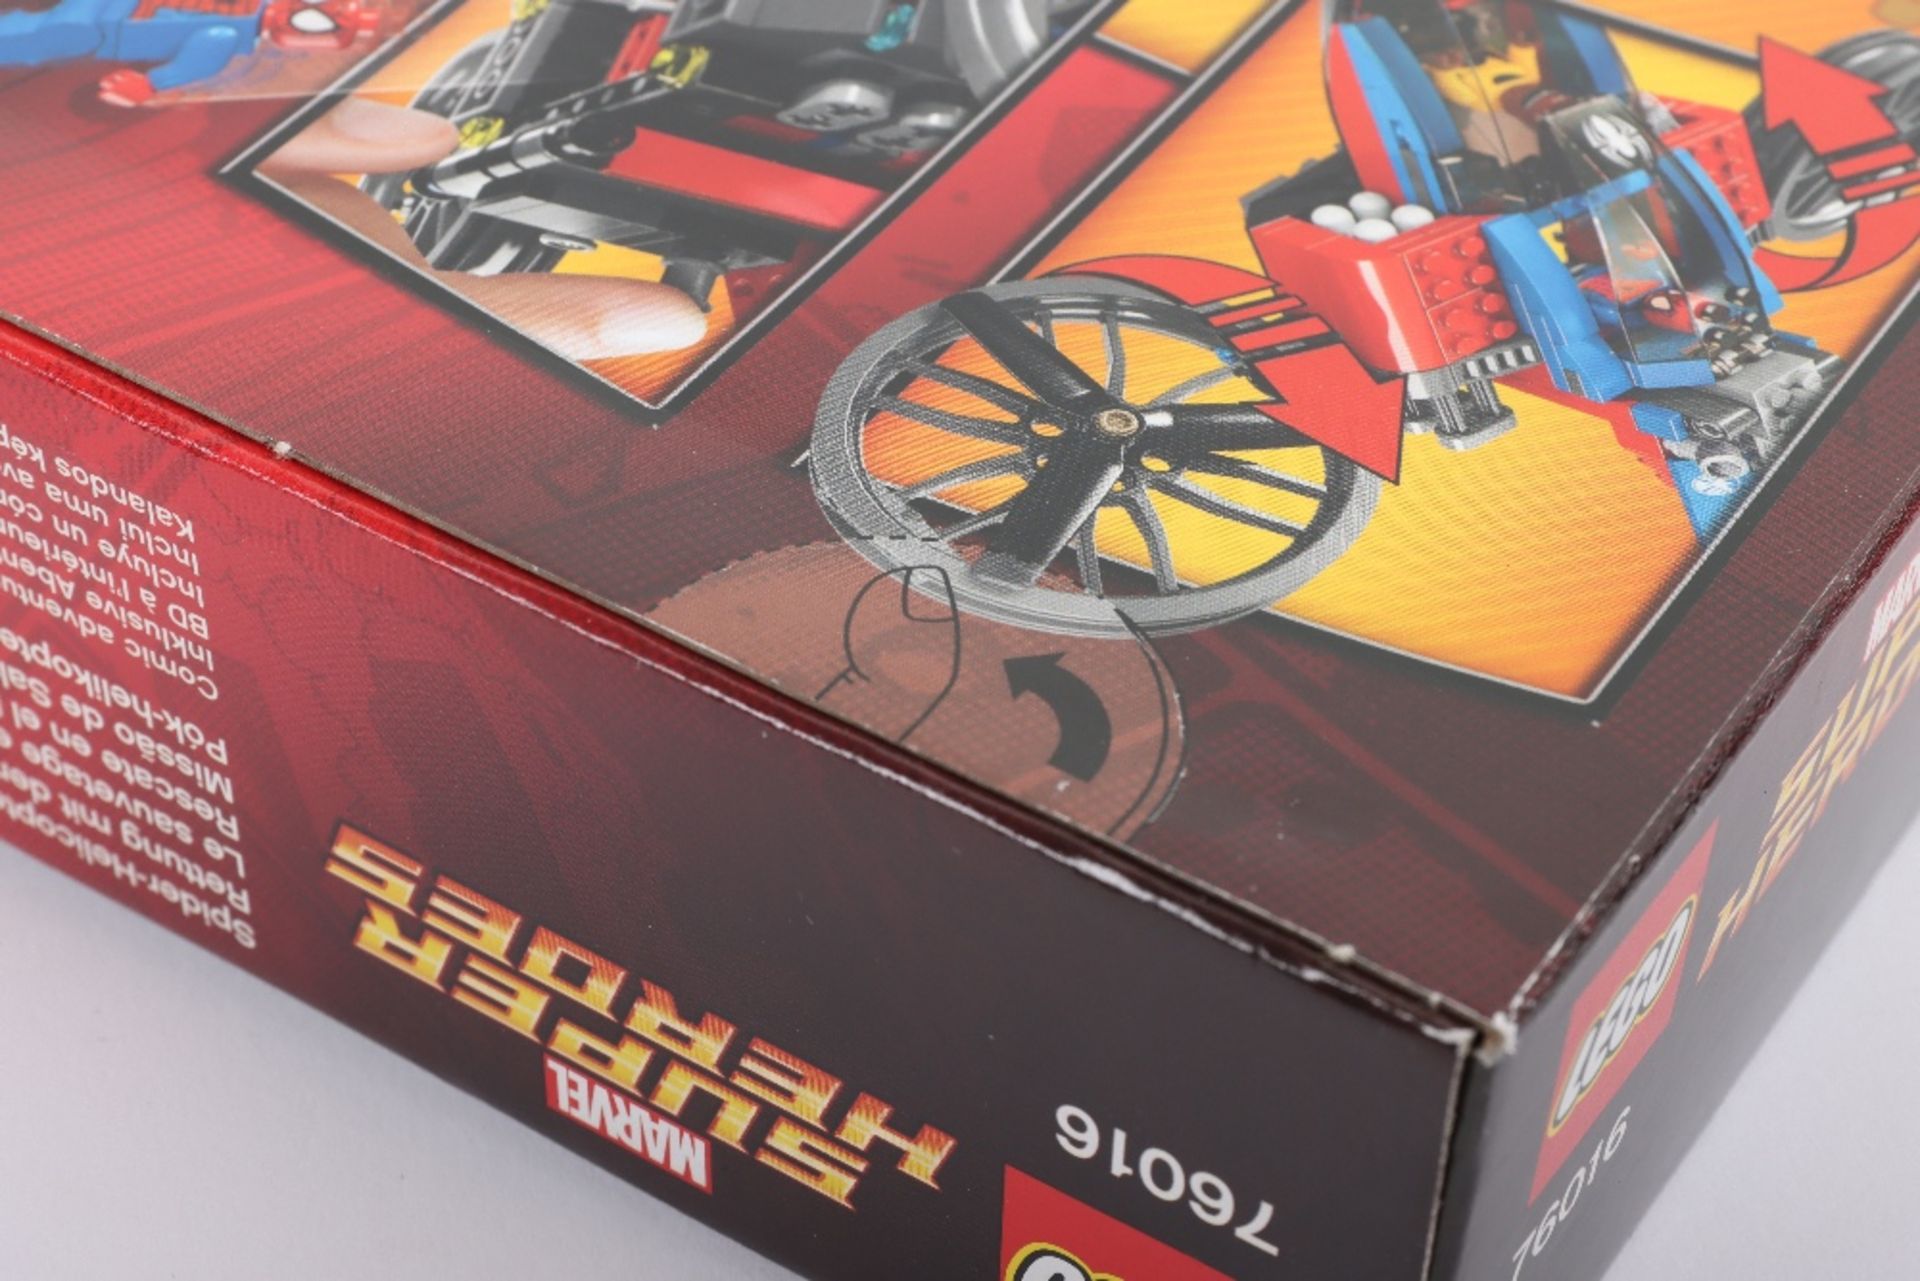 Lego Marvel Superheroes 76016 Spider-helicopter rescue sealed set - Image 4 of 7